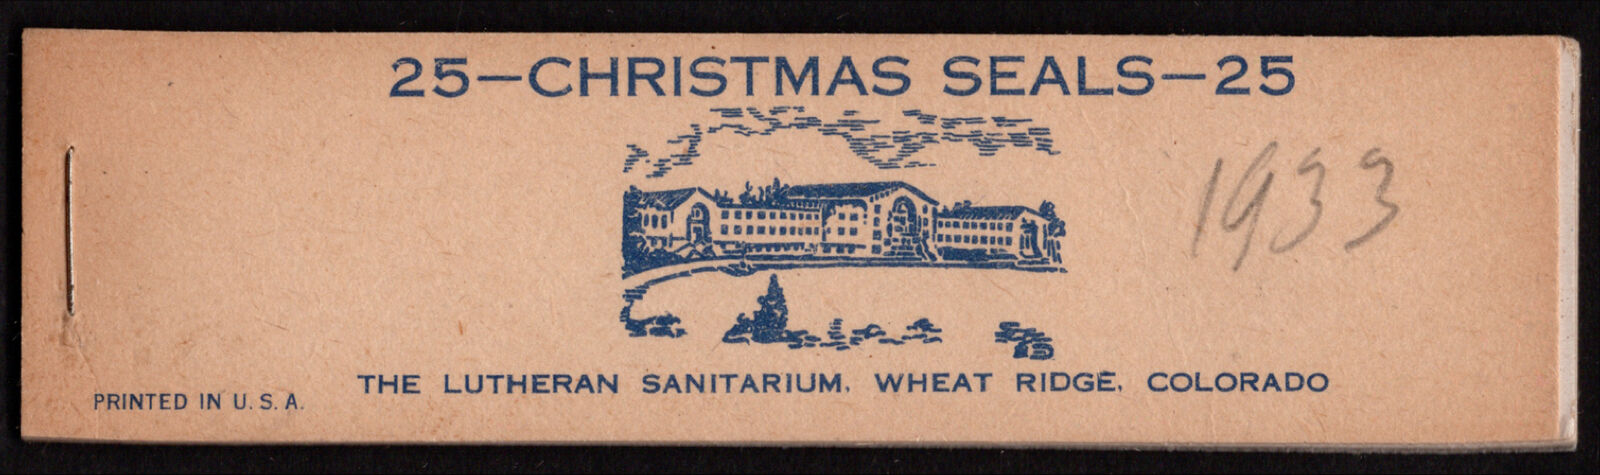 South Africa 1933 The Lutheran Sanitarium Christmas Seals Bookle